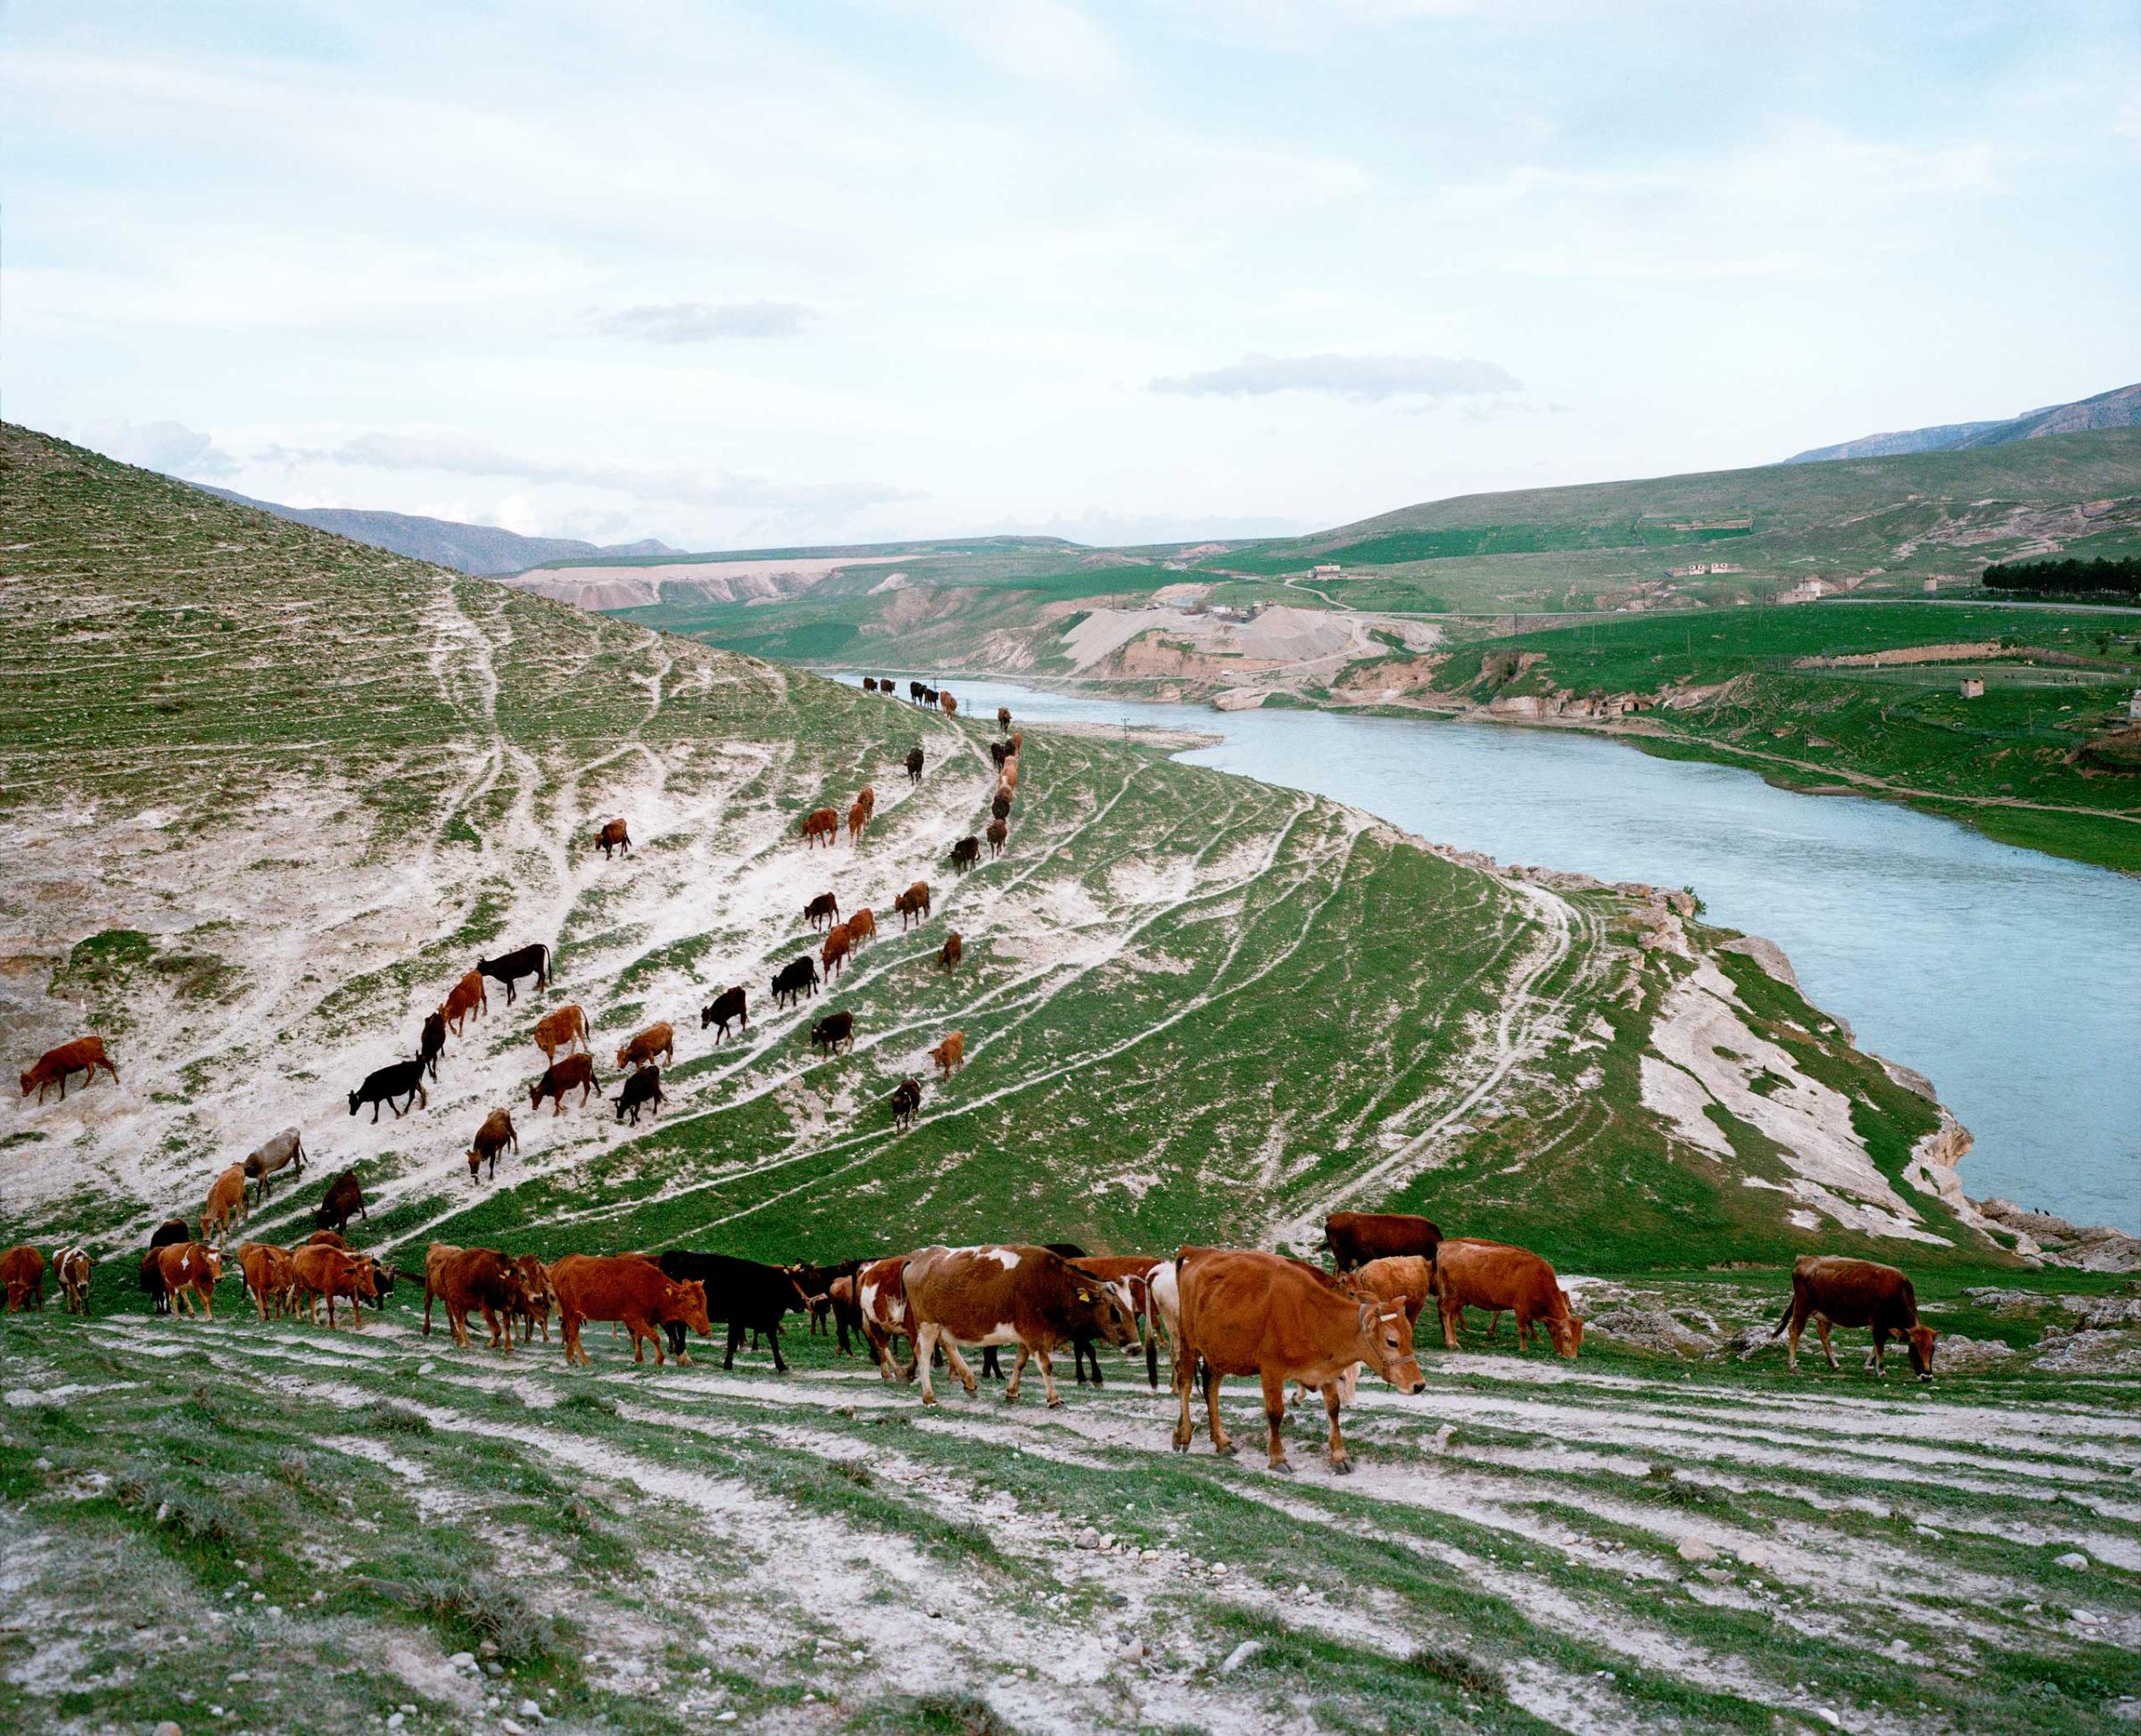 A herd of cattle walk back toward the village by the banks of the Tigris River. Kesmeköprü, Turkey.